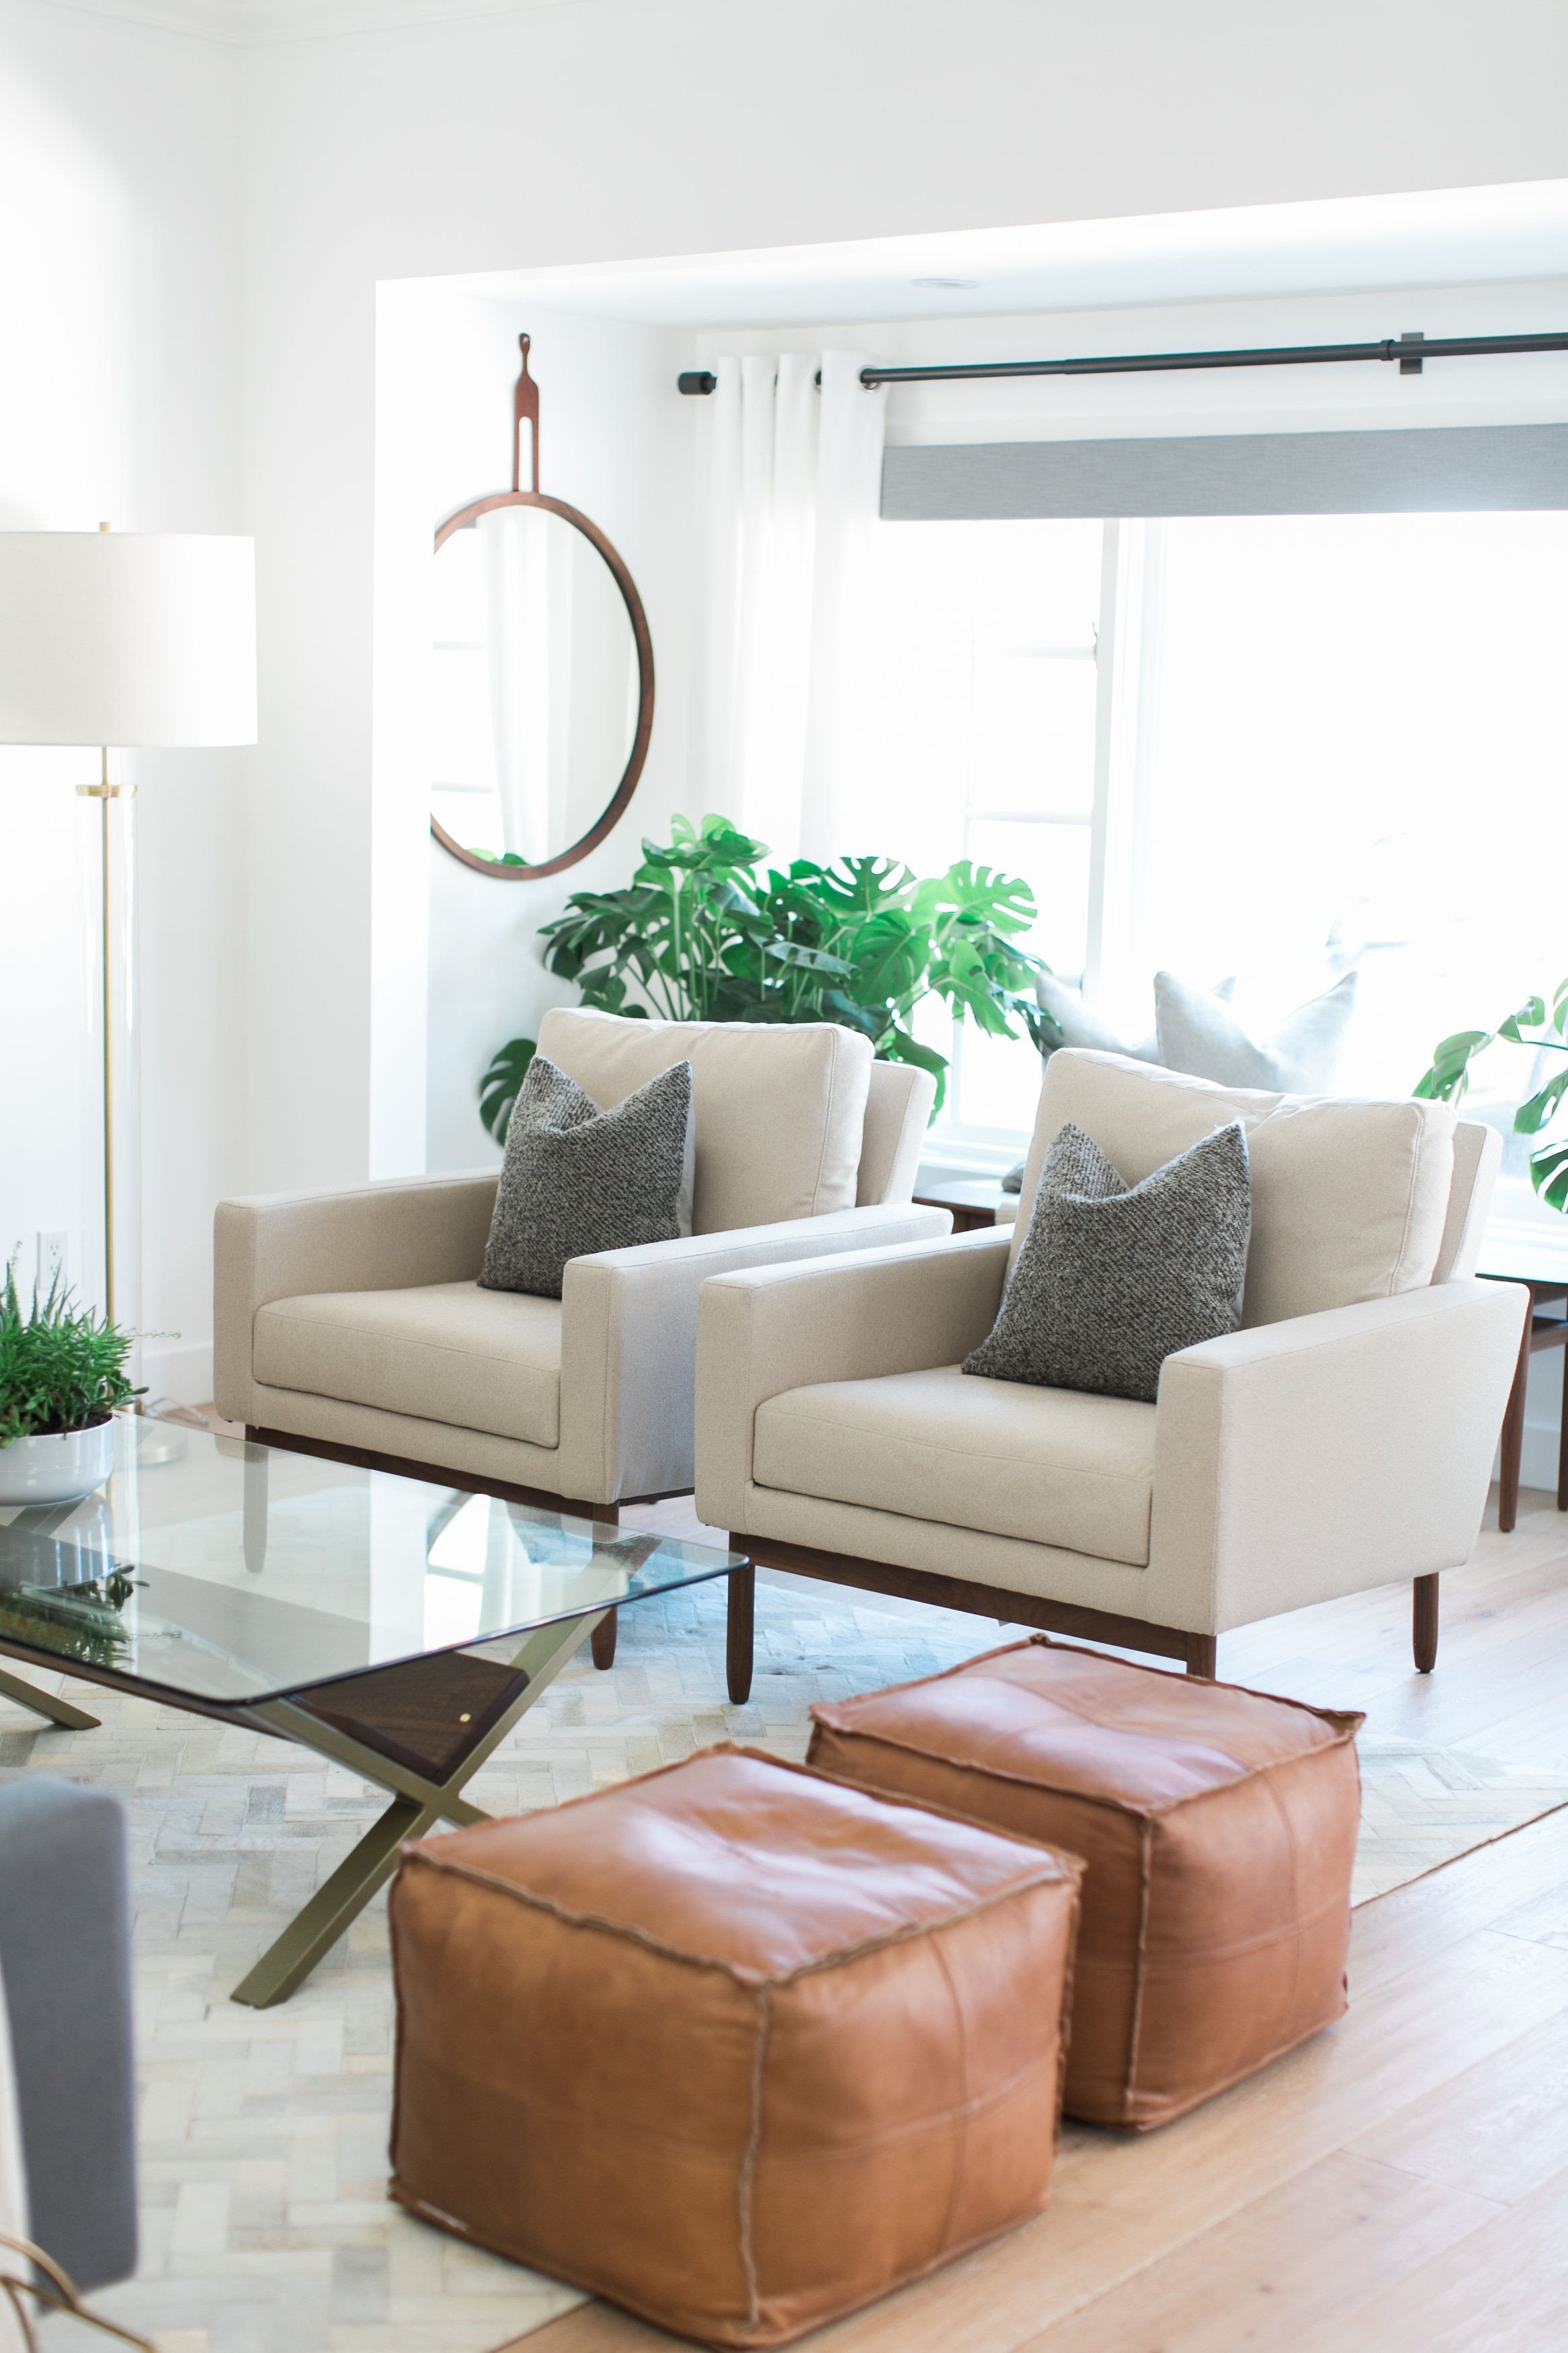 Comfortable Living Room Mid Century Fresh Lindye Galloway Interiors Mid Century Modern Interior Design Furniture In 2019